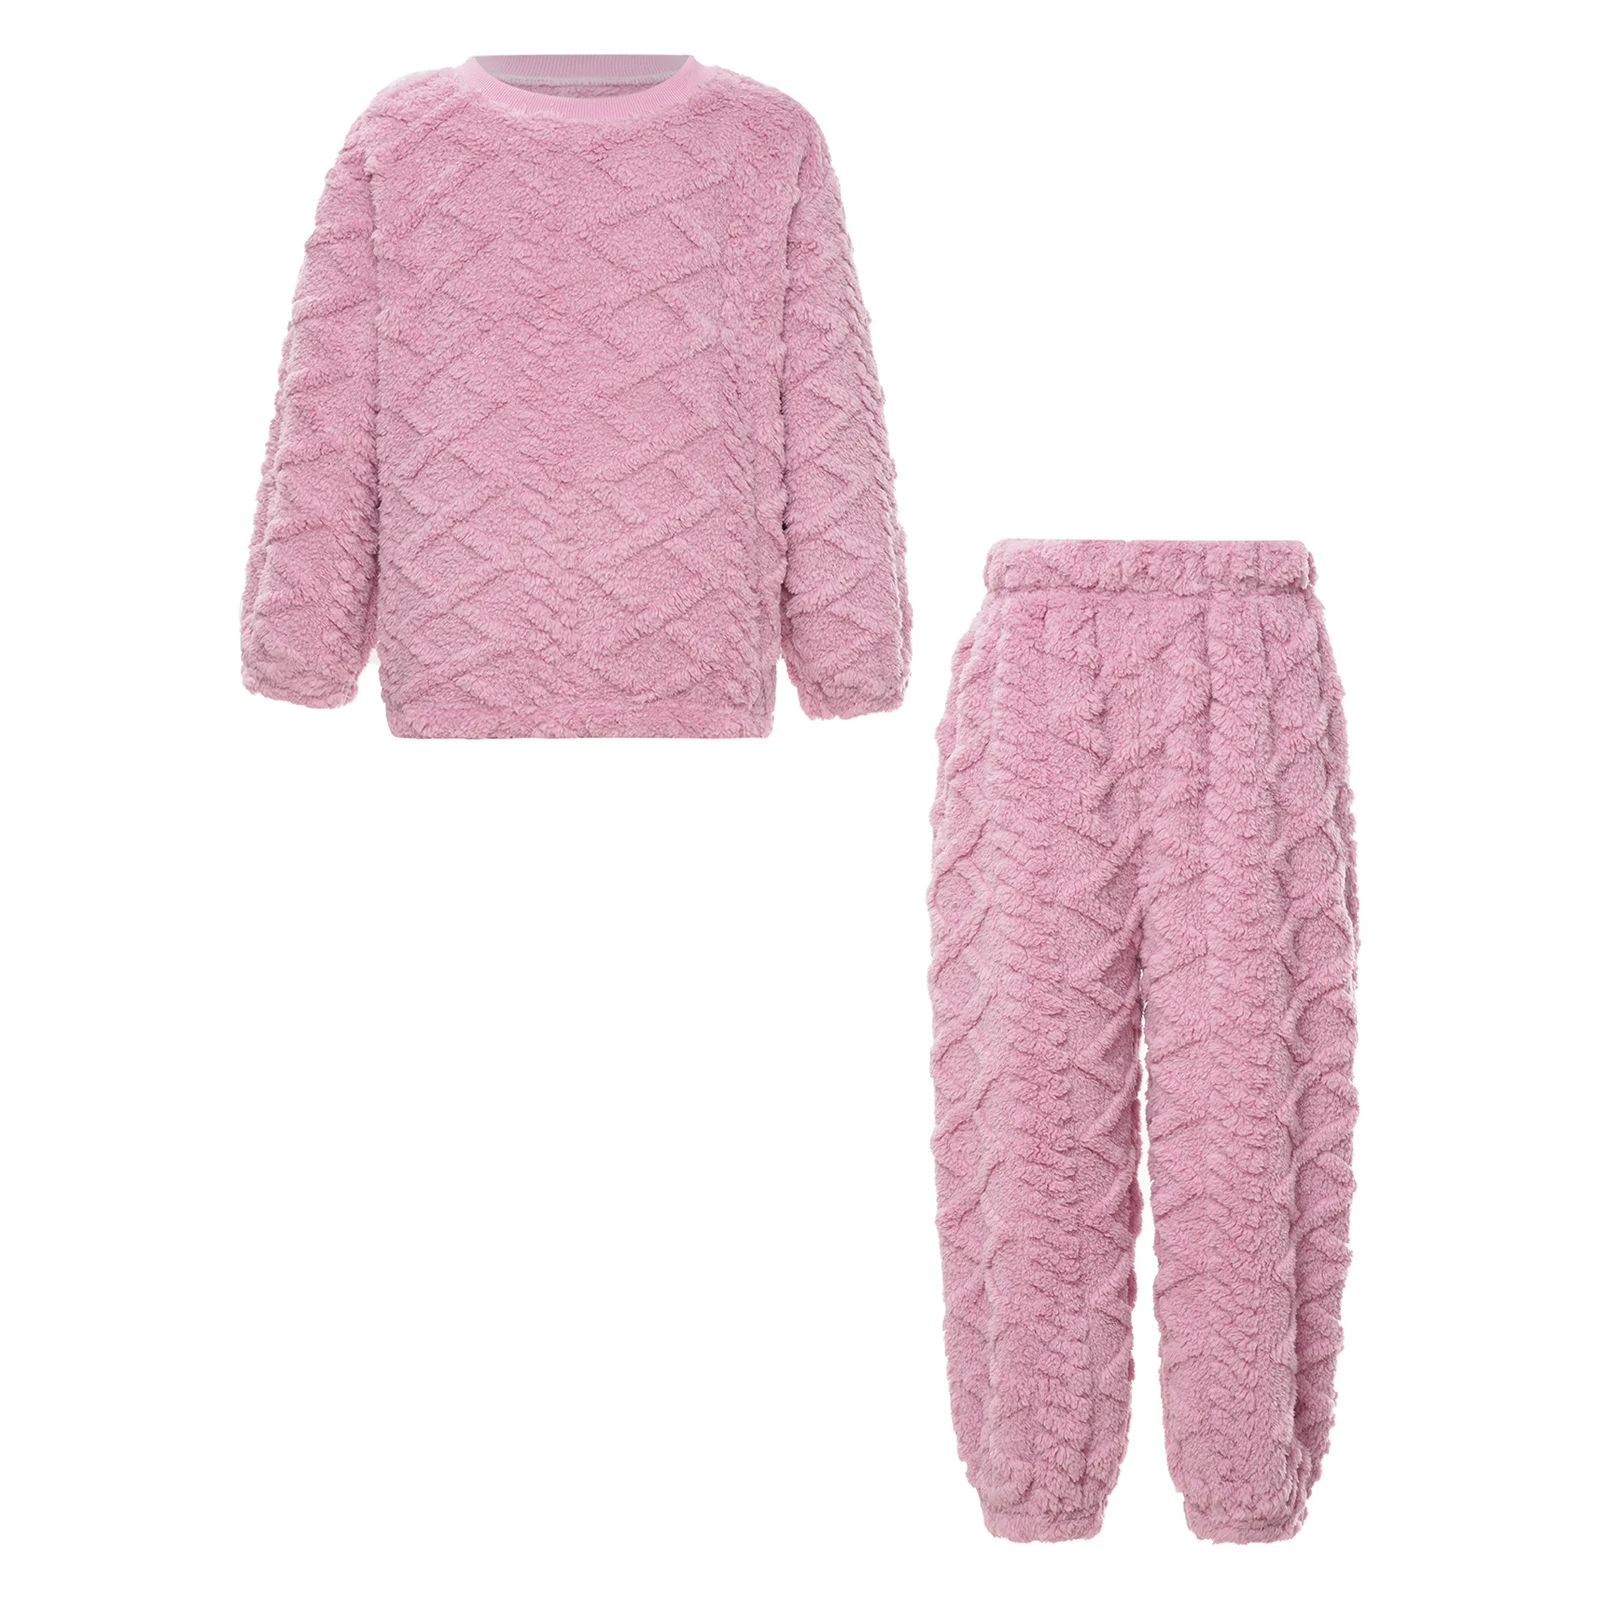 

Winter Kids Boys Girls Nightwear Fuzzy Flannel Pajamas Set Homewear Loungewear Unisex Long Sleeve Round Neck Tops with Pants